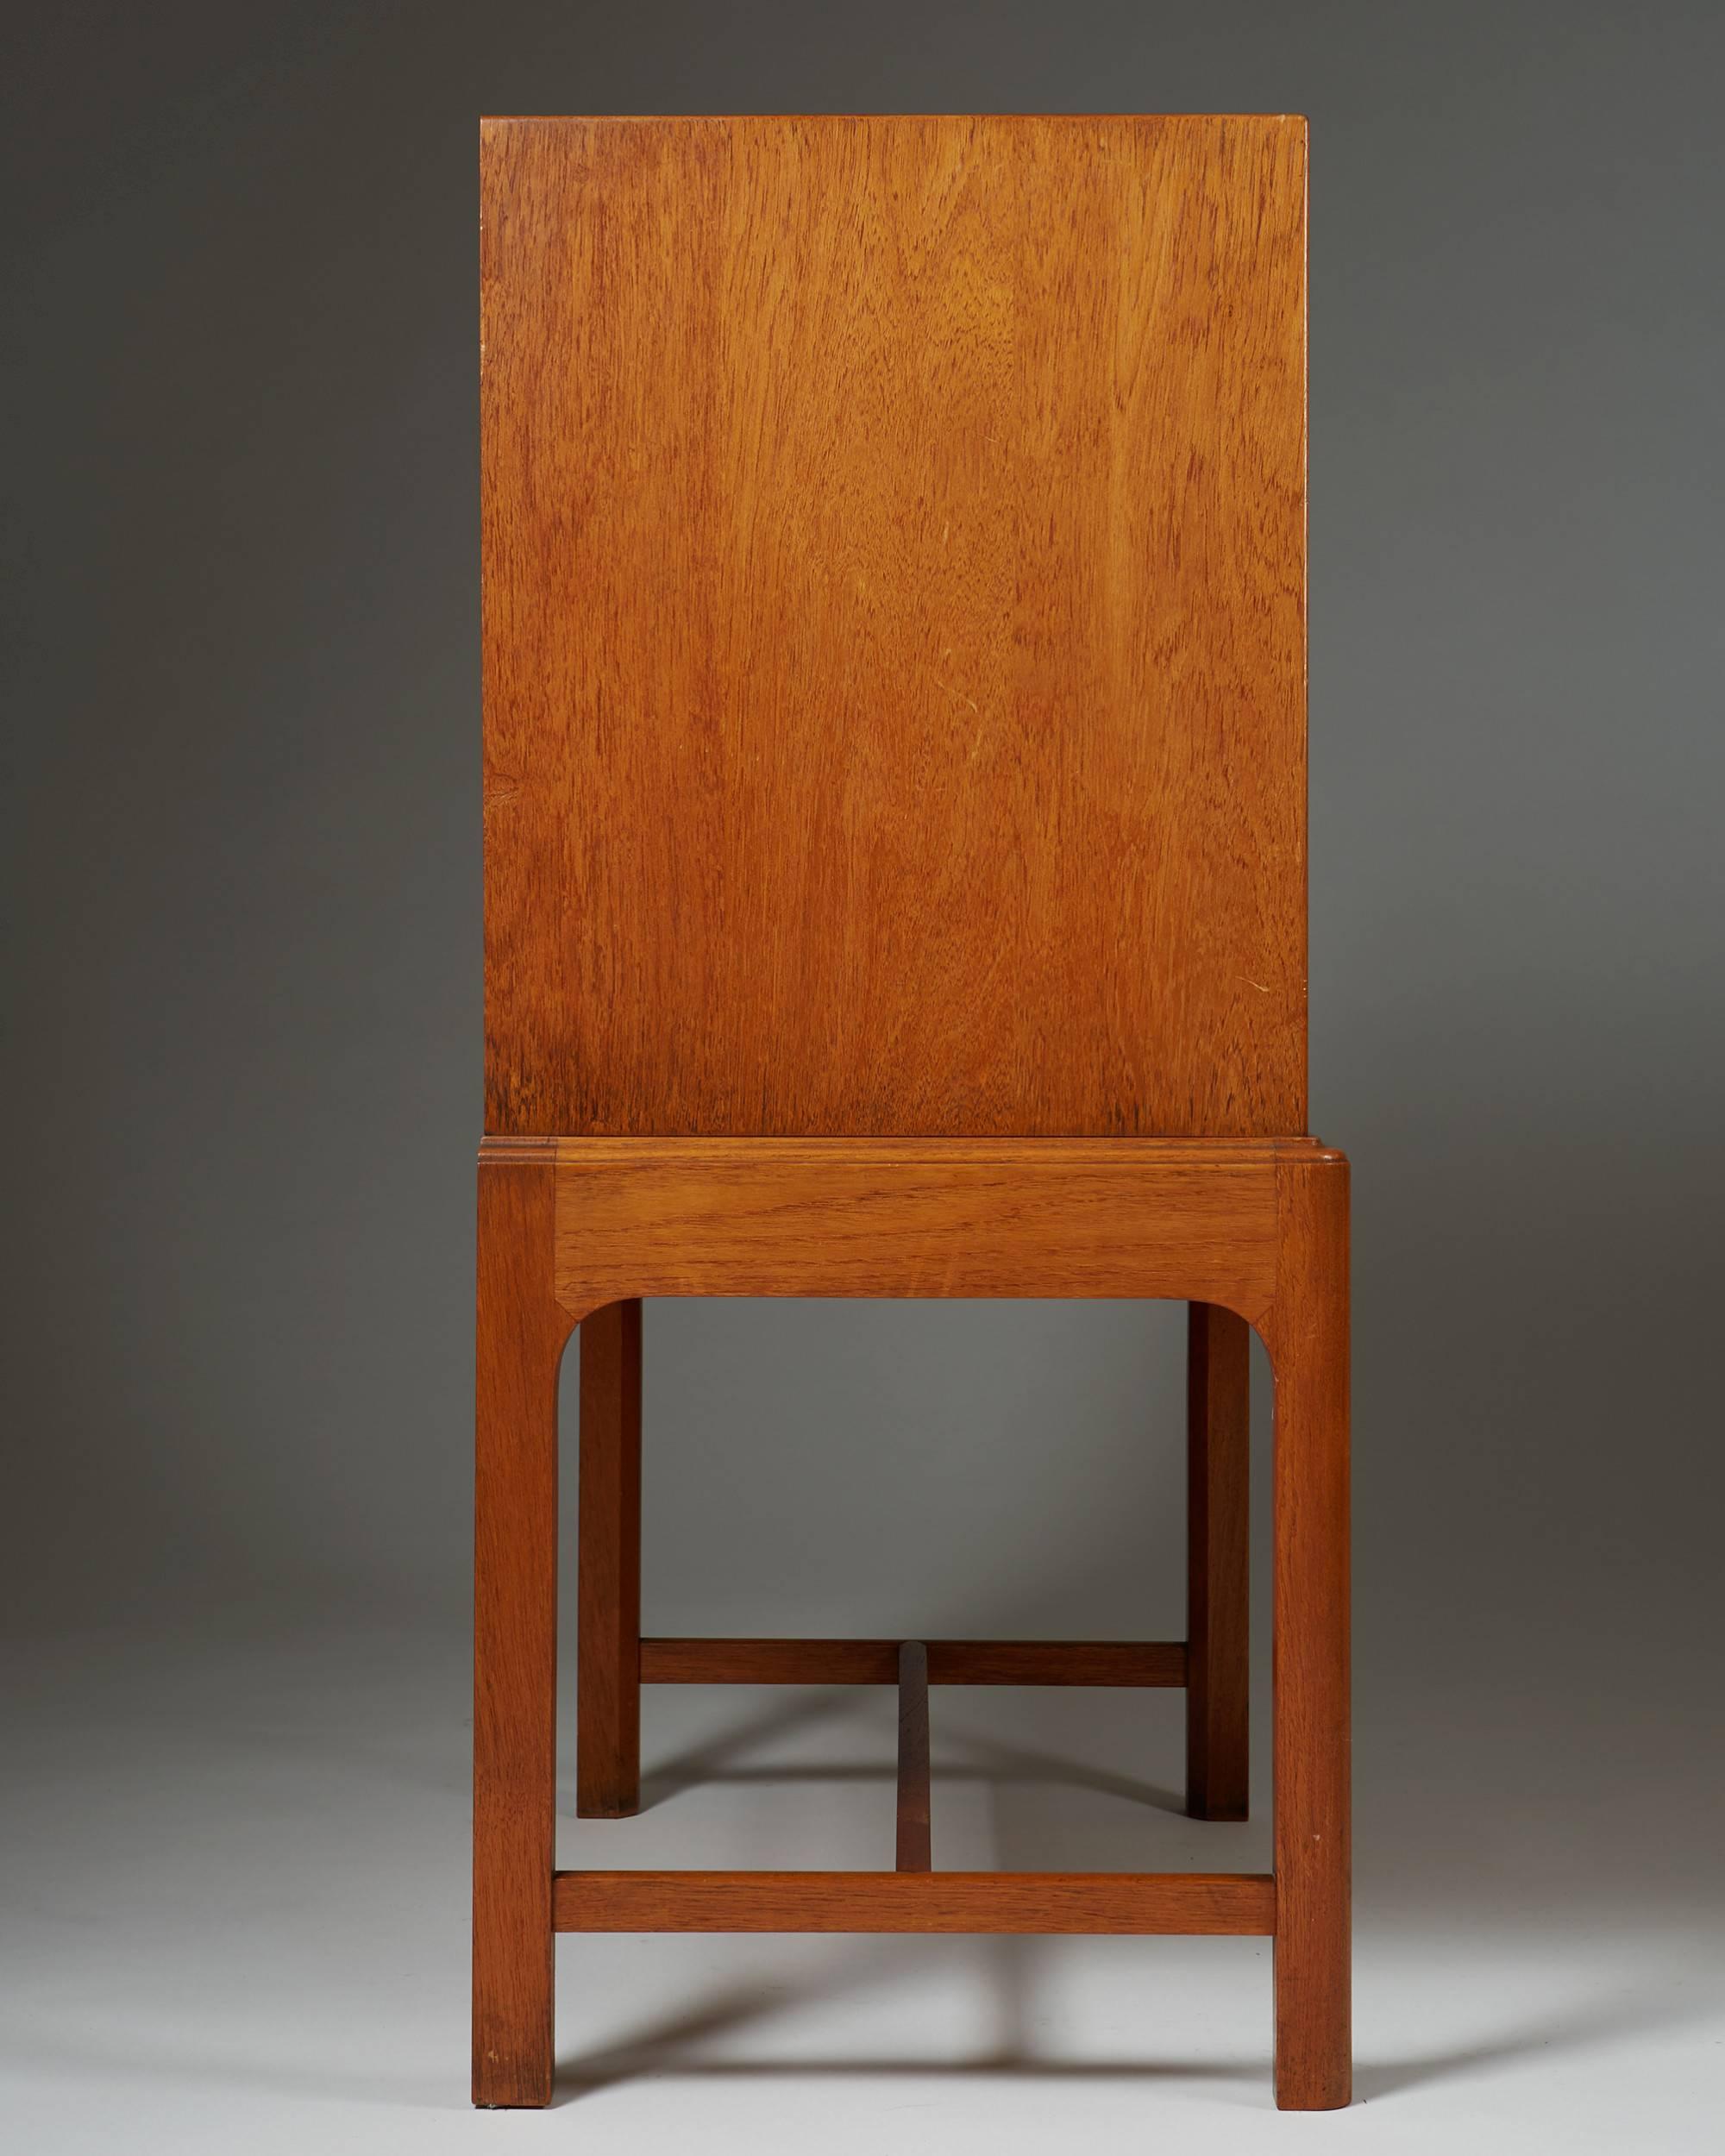 Scandinavian Modern Cabinet Designed by Kaare Klint for Rud Rasmussen, Denmark, 1930s